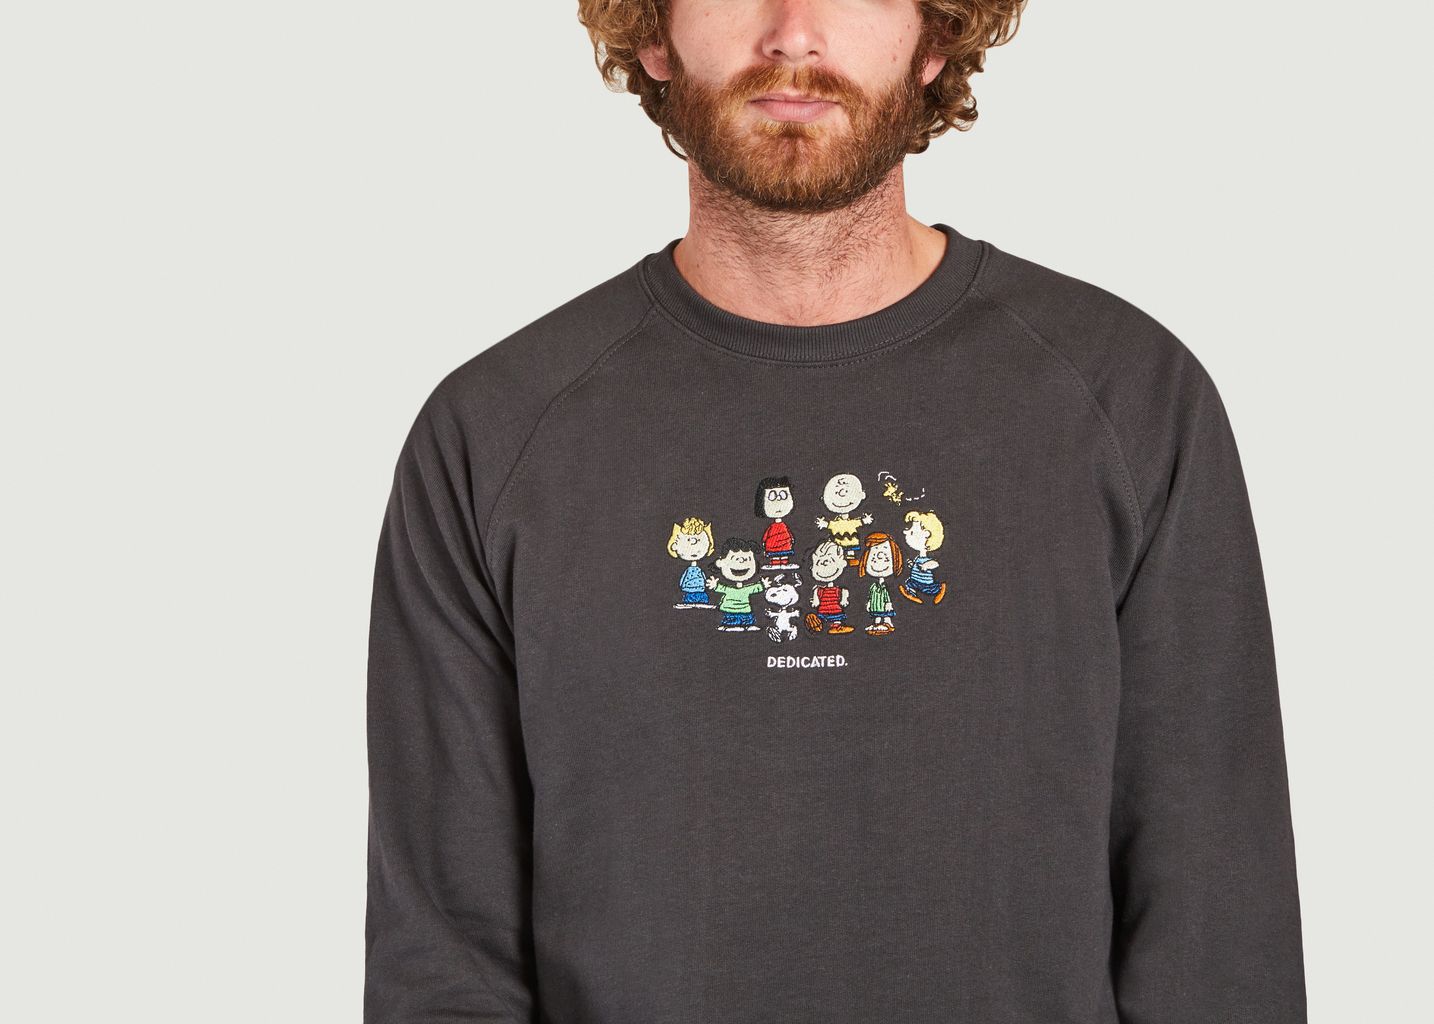 Malmoe Peanuts Friends Sweatshirt - Dedicated Brand